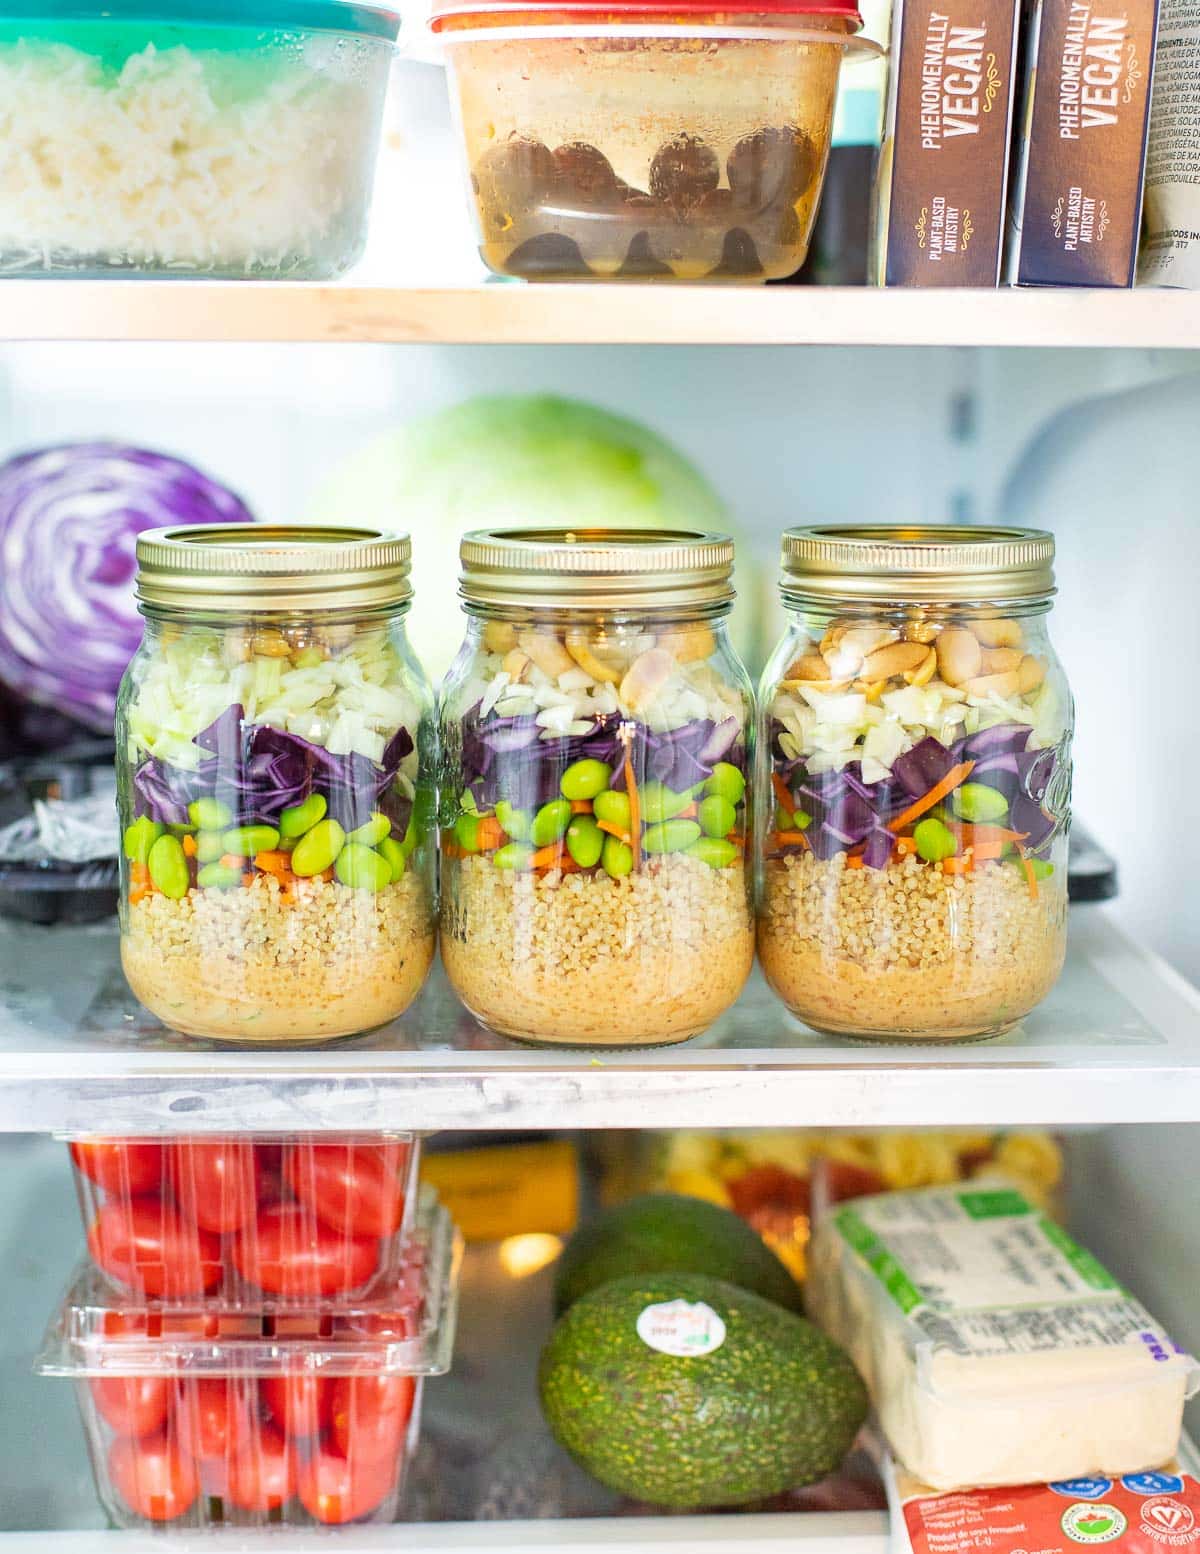 jars of salad on a shelf in a fridge